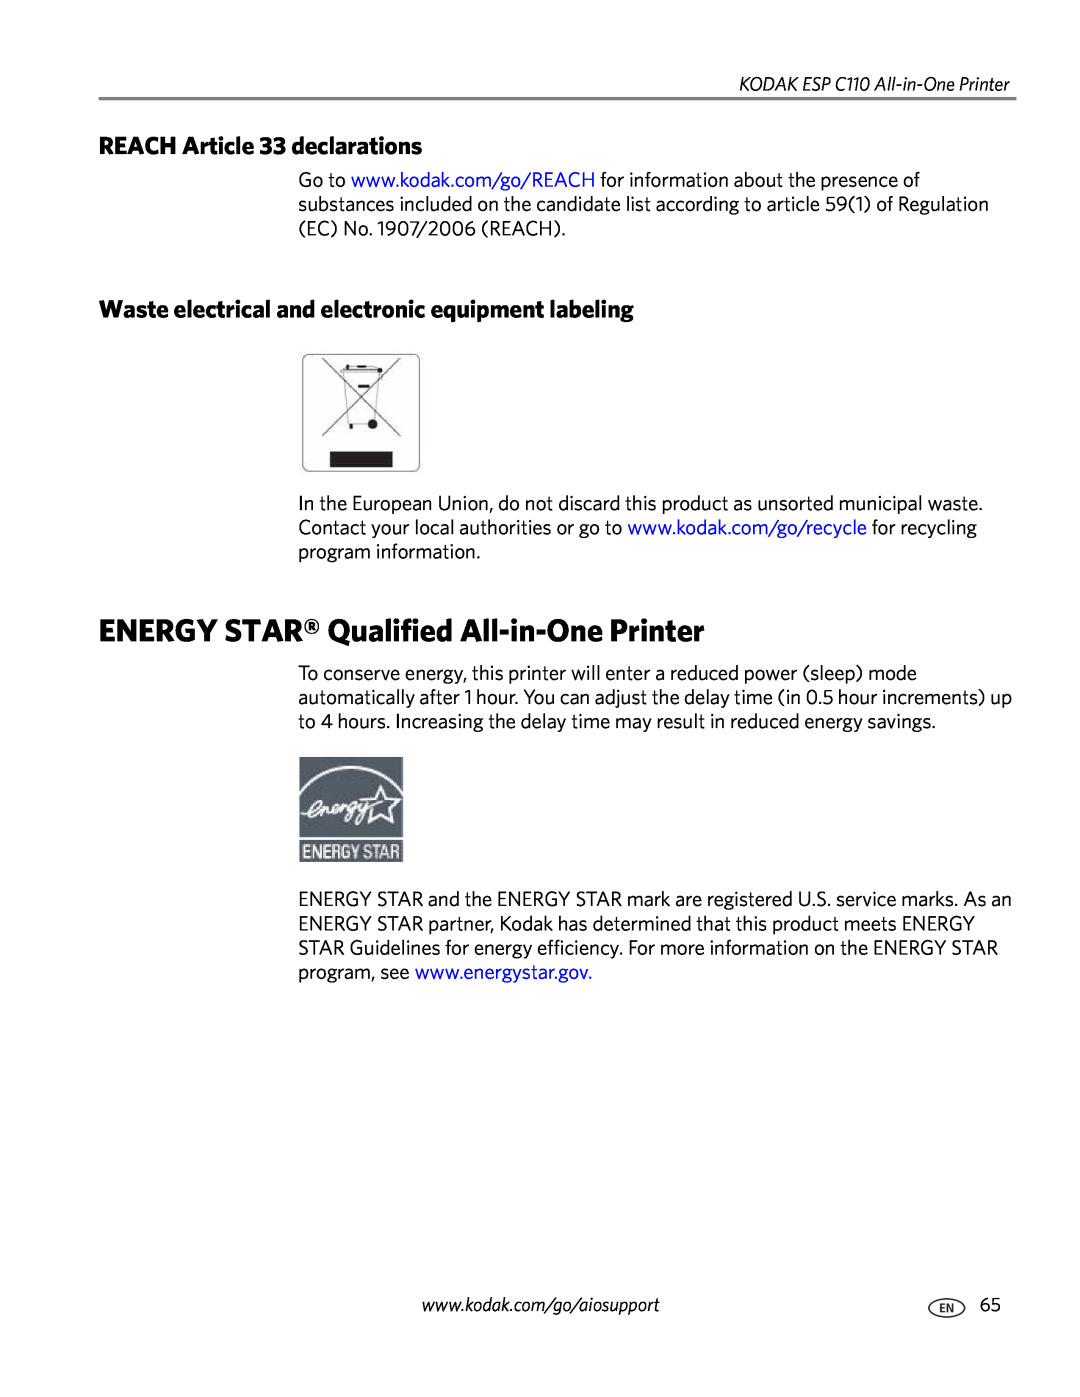 Kodak C110 manual ENERGY STAR Qualified All-in-One Printer, REACH Article 33 declarations 